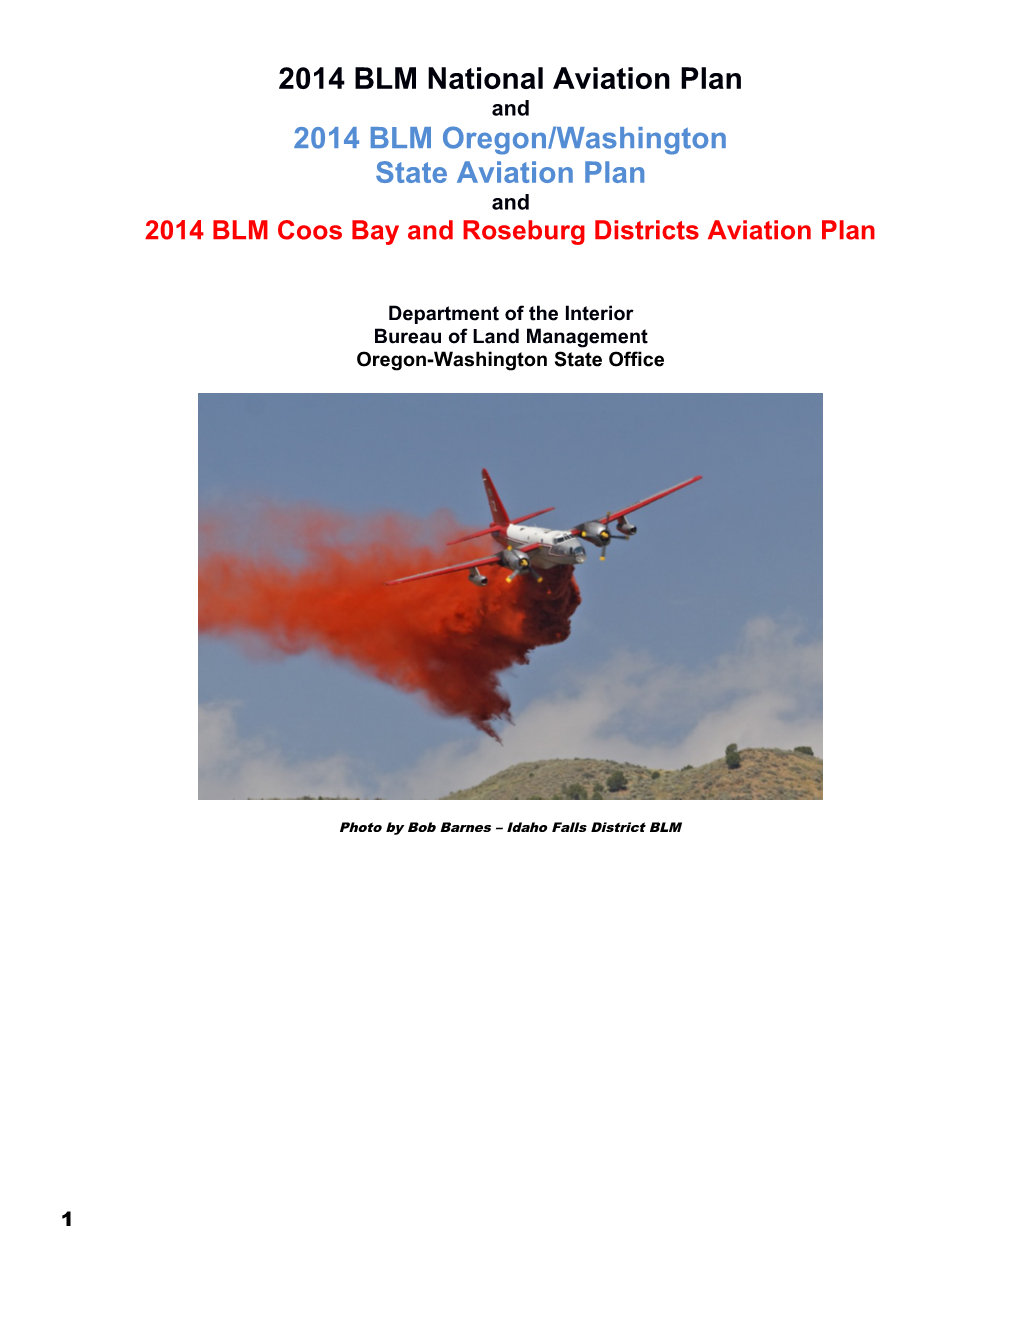 2014 BLM Coos Bay and Roseburg Districts Aviation Plan